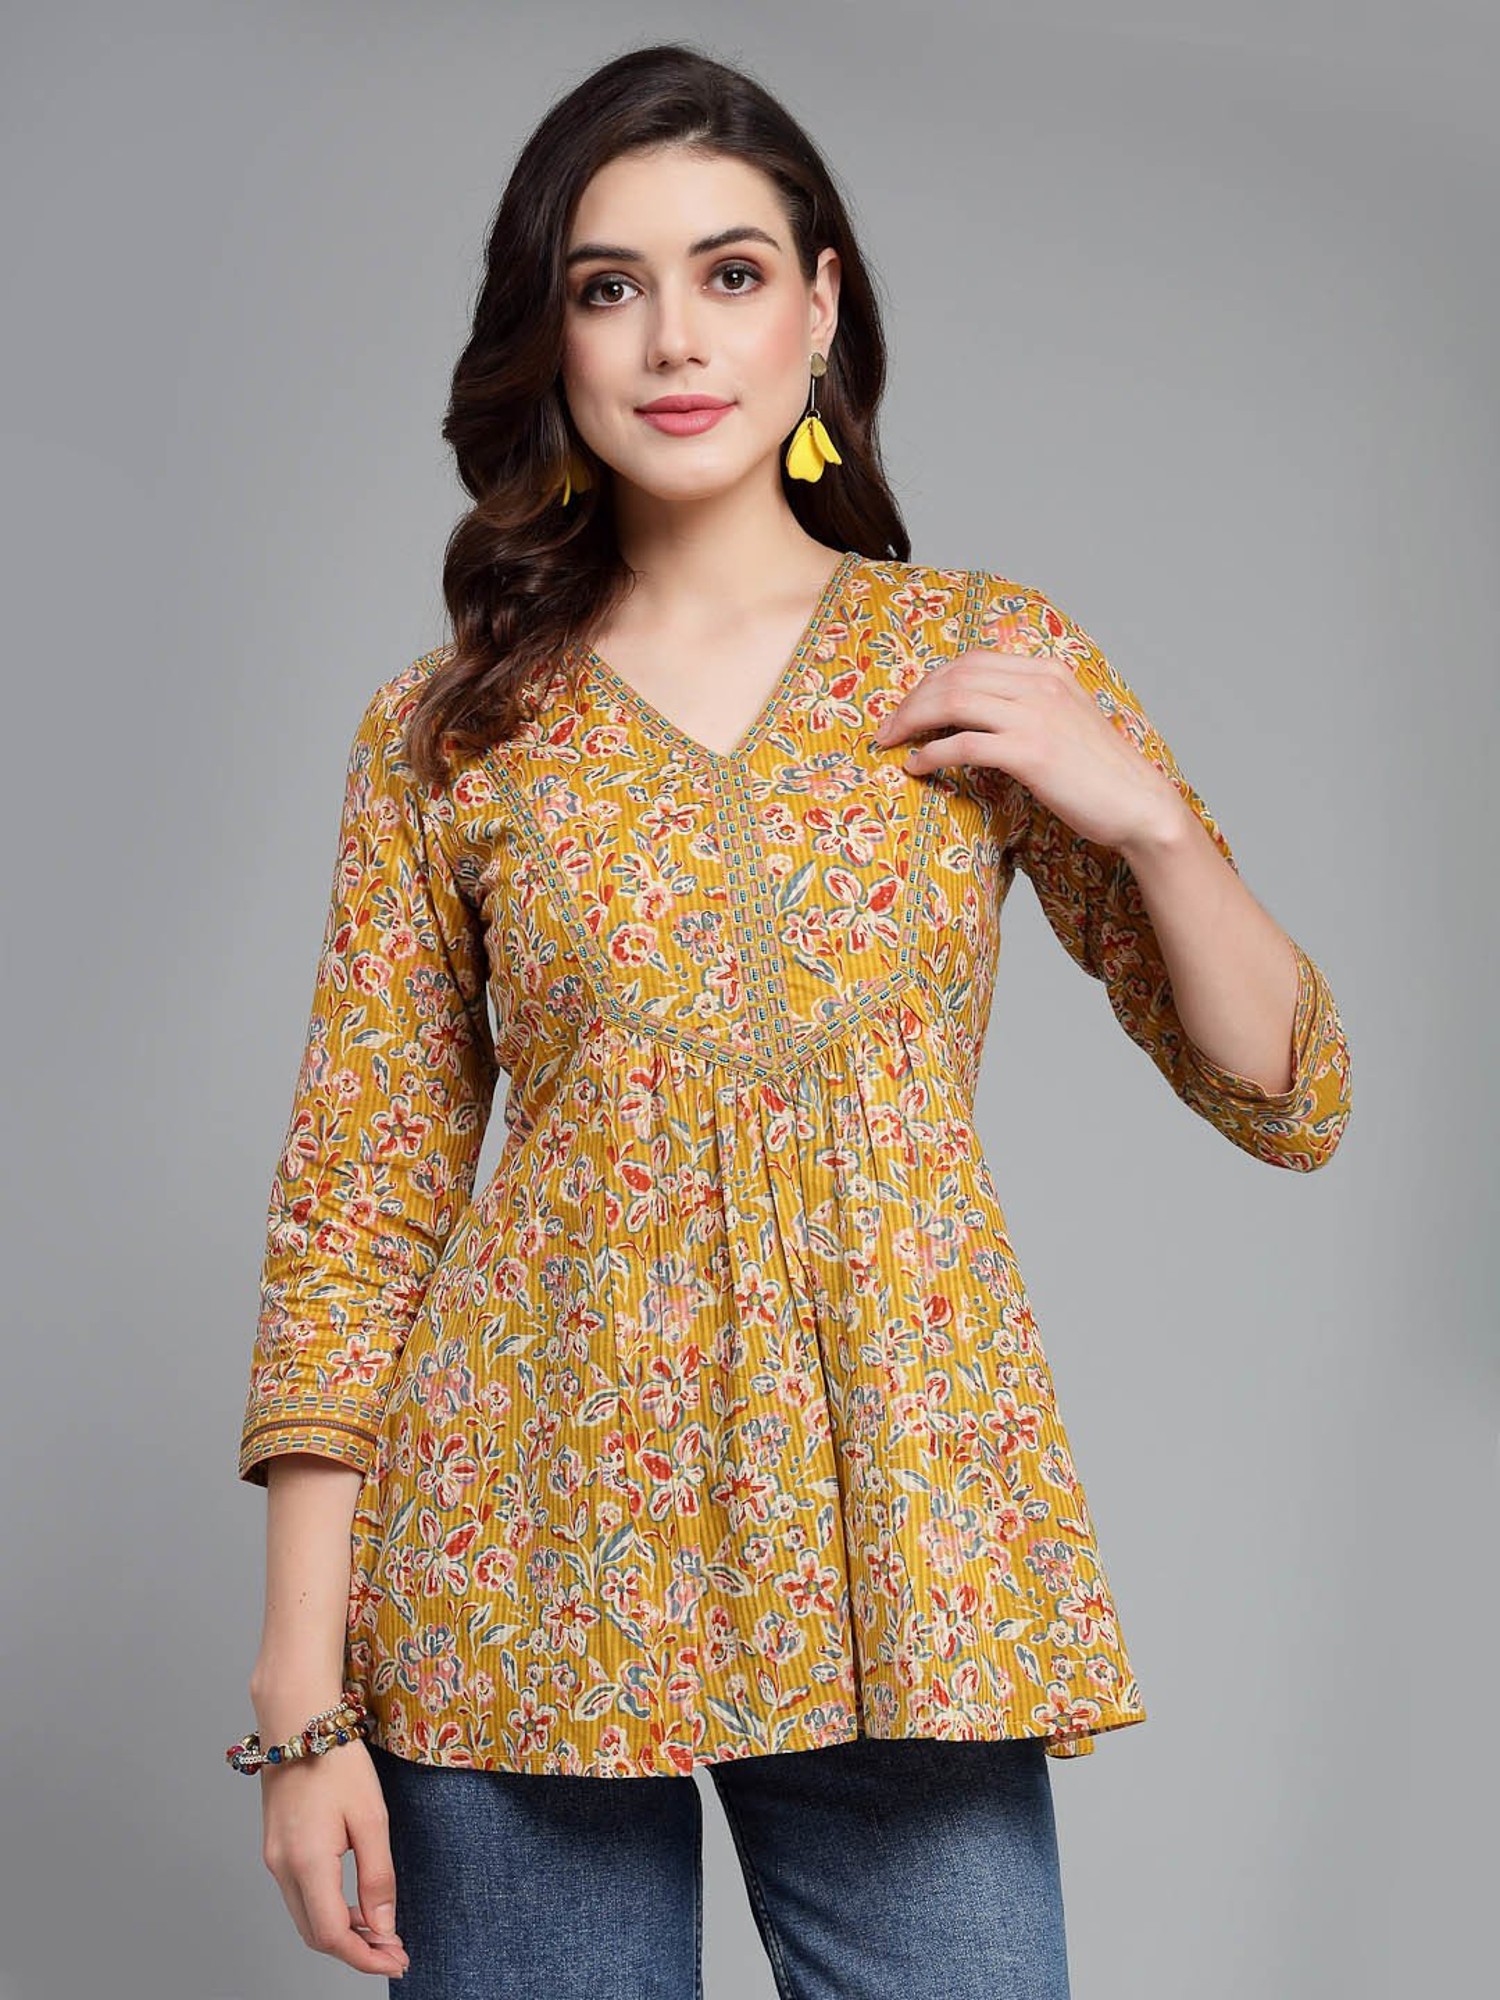 Buy Glomee Short Kurtis for Women | Rayon Fabric Tunics Top | Round Neck |  Stylish Cotton Embroidered Kurtis (XXX-Large, Yellow) at Amazon.in